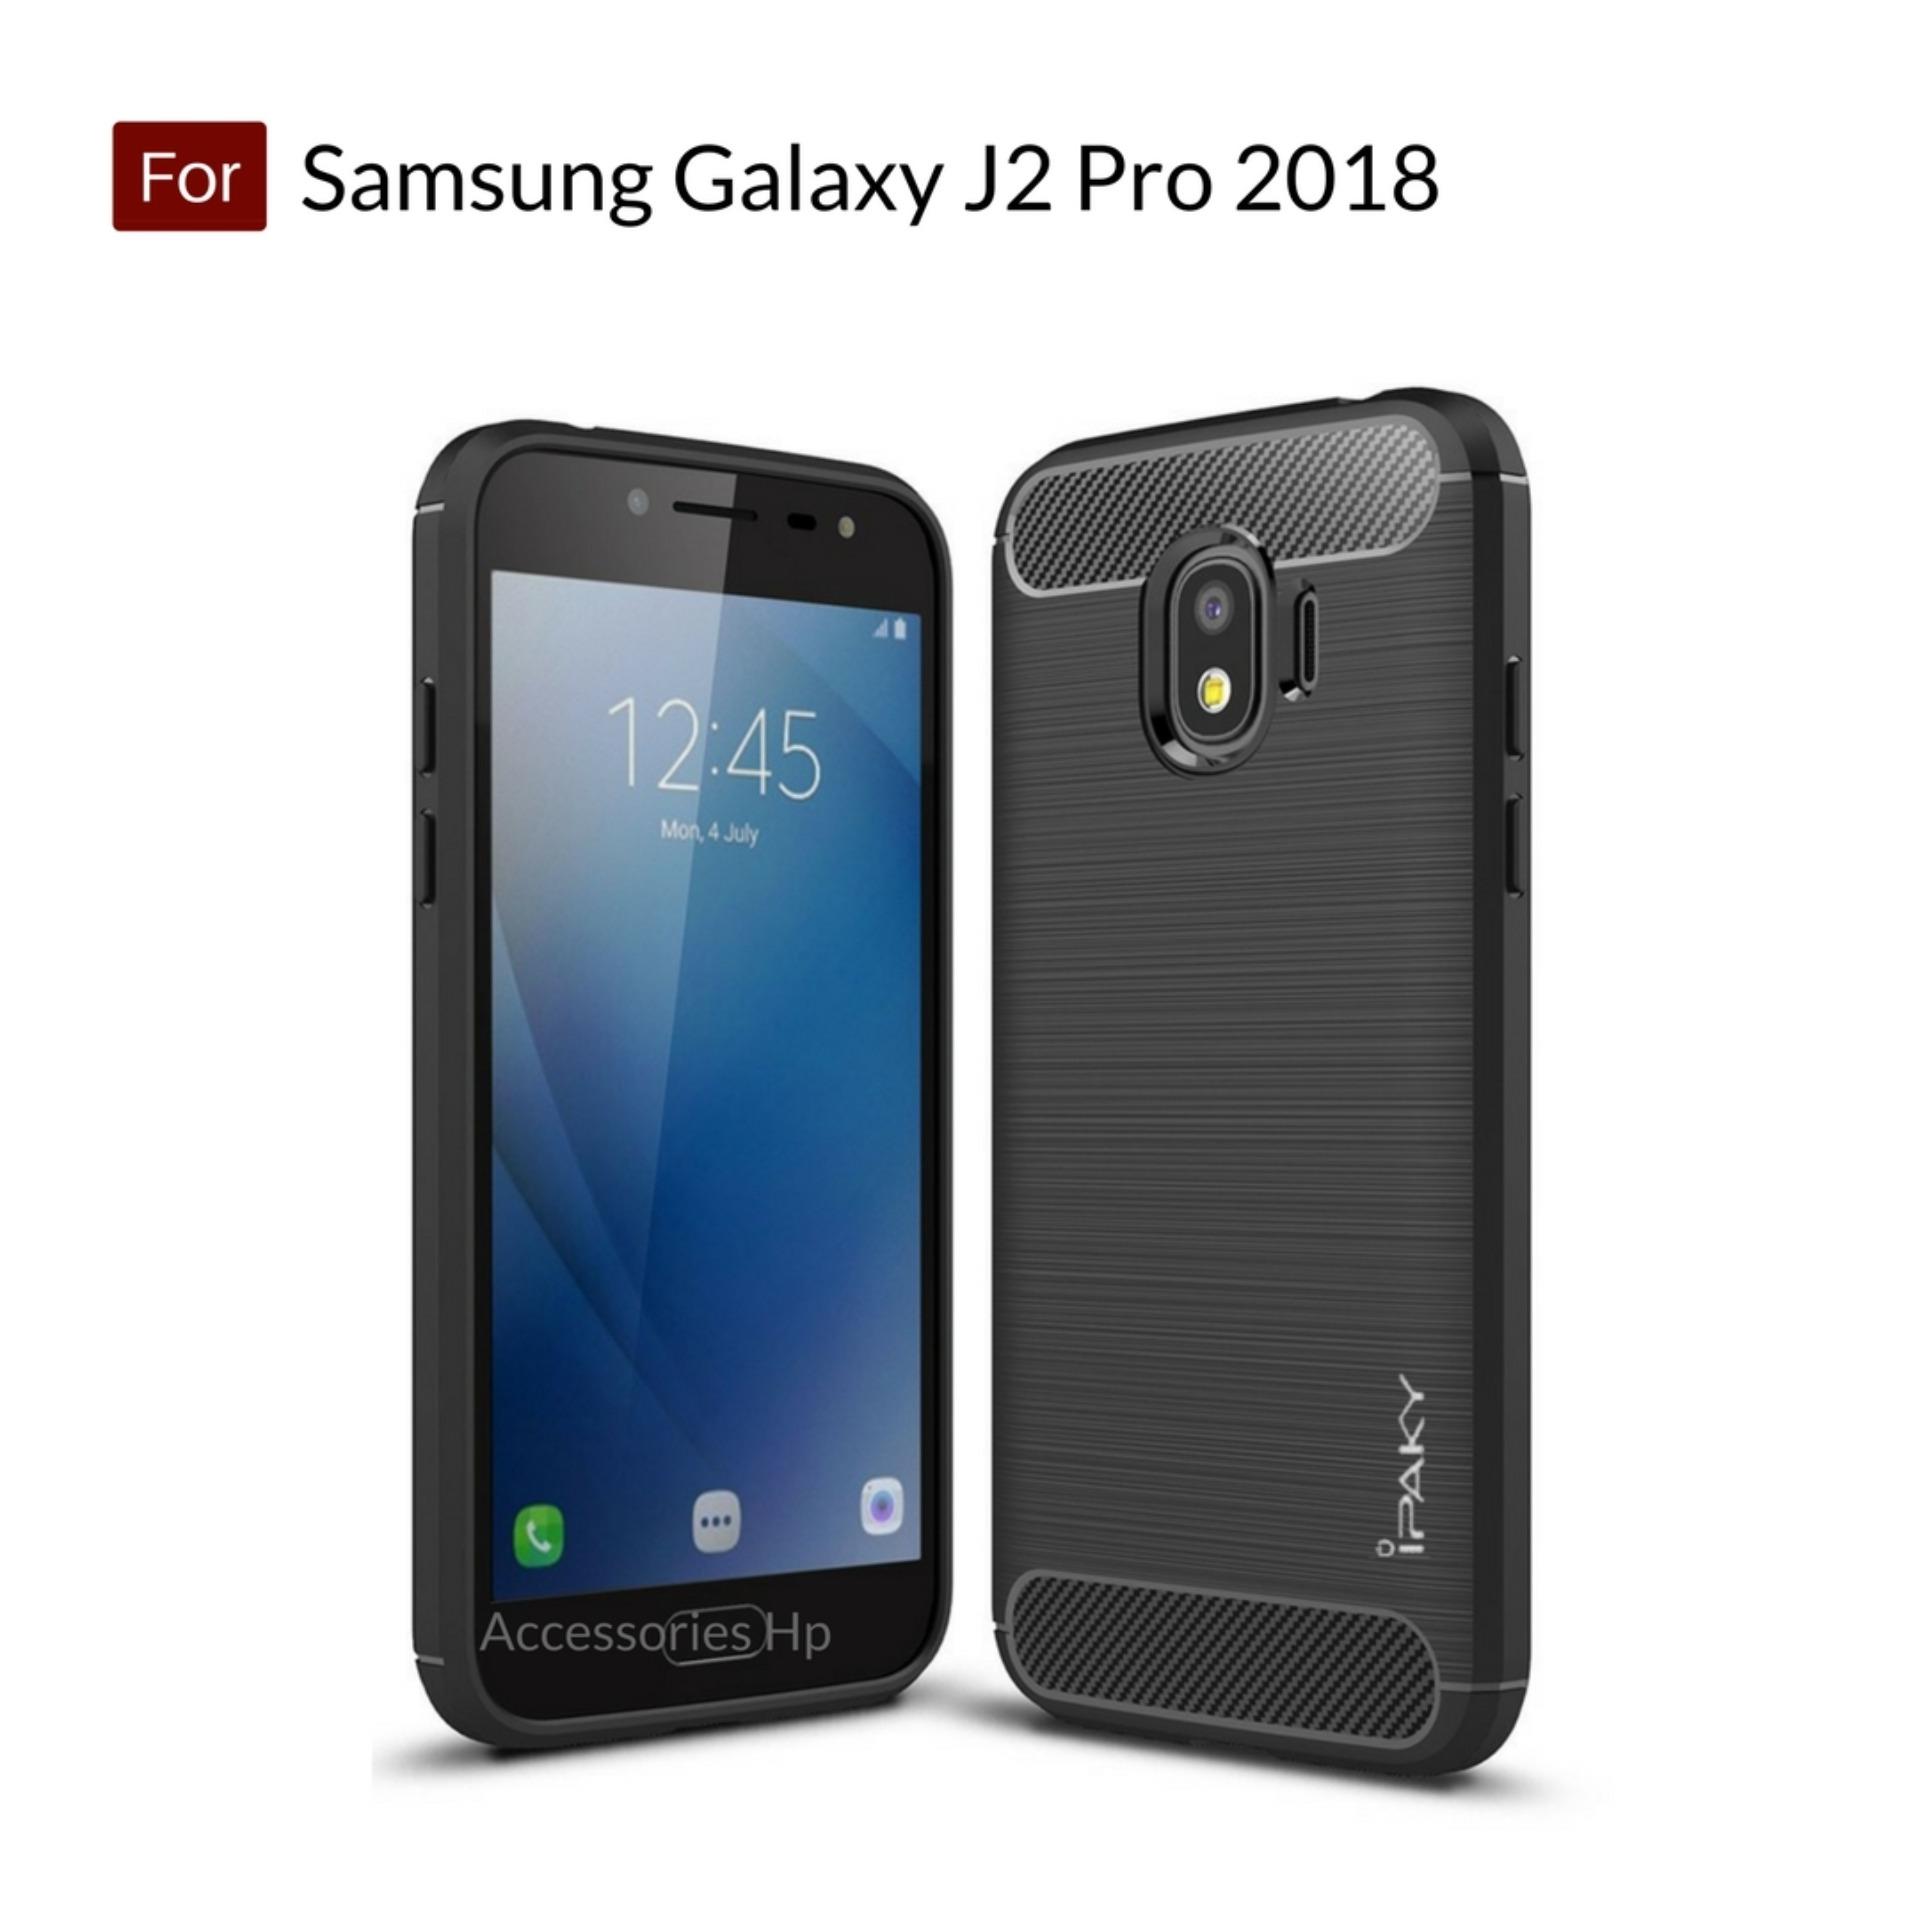 Accessories HP Premium Quality Carbon Shockproof Hybrid Case For Samsung Galaxy J2 Pro 2018 - Black